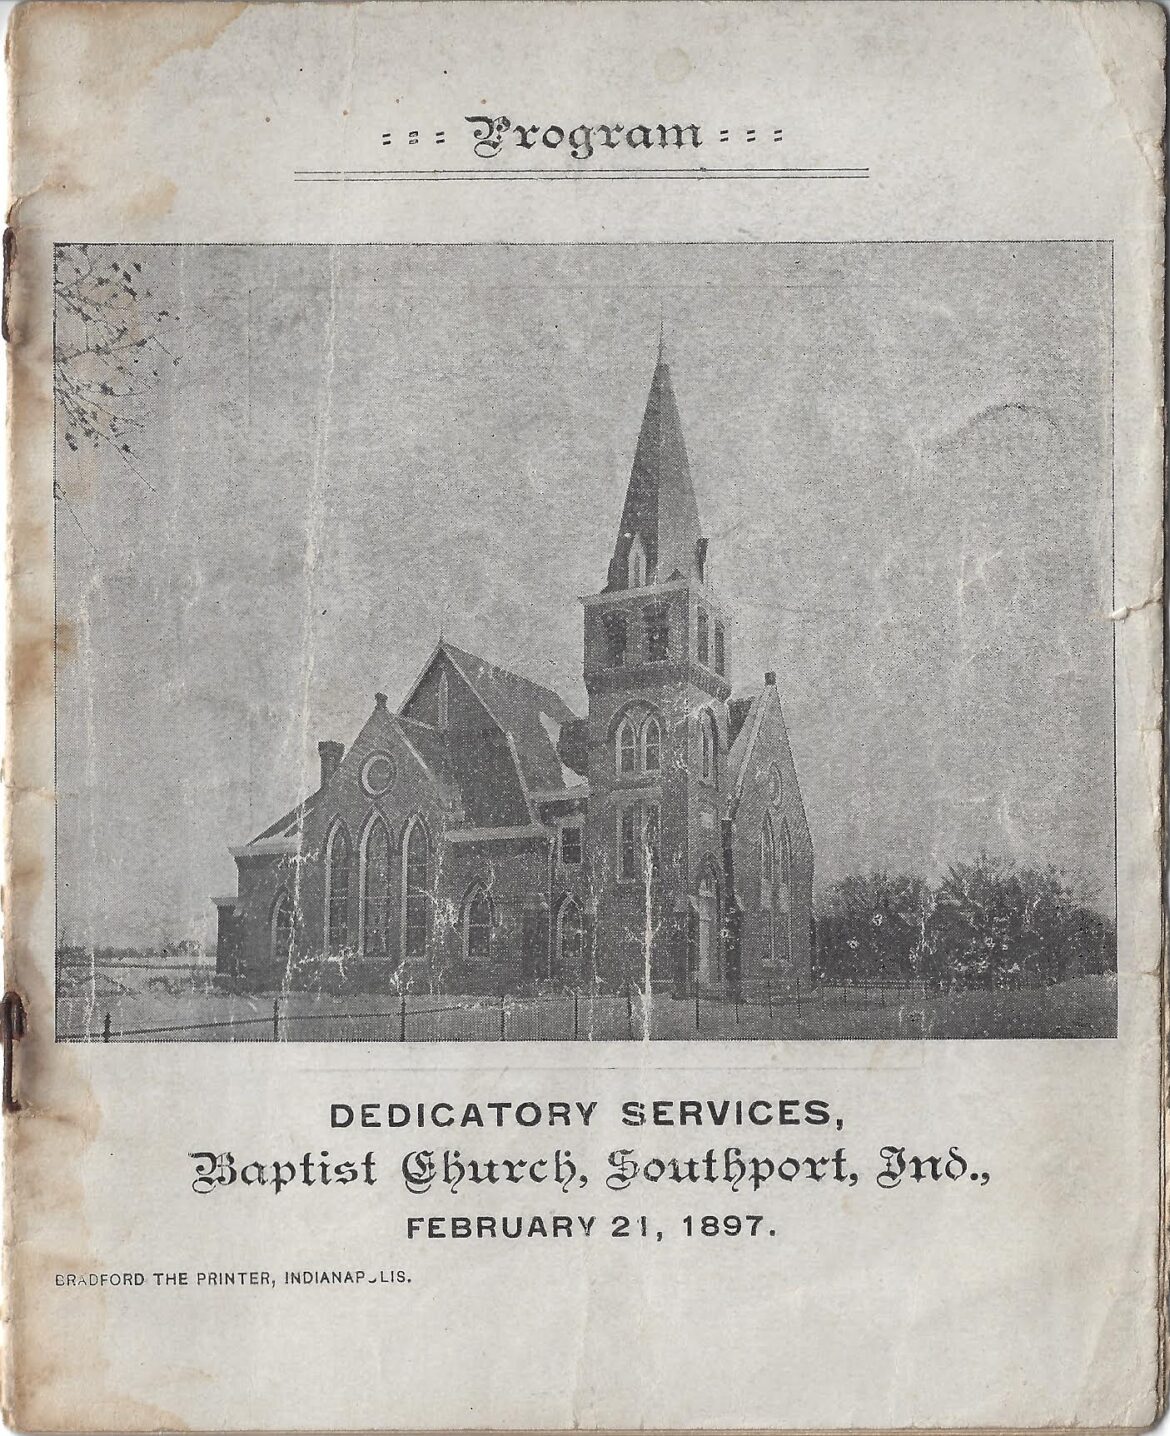 Samuel Bryan Chapter digitizes church records